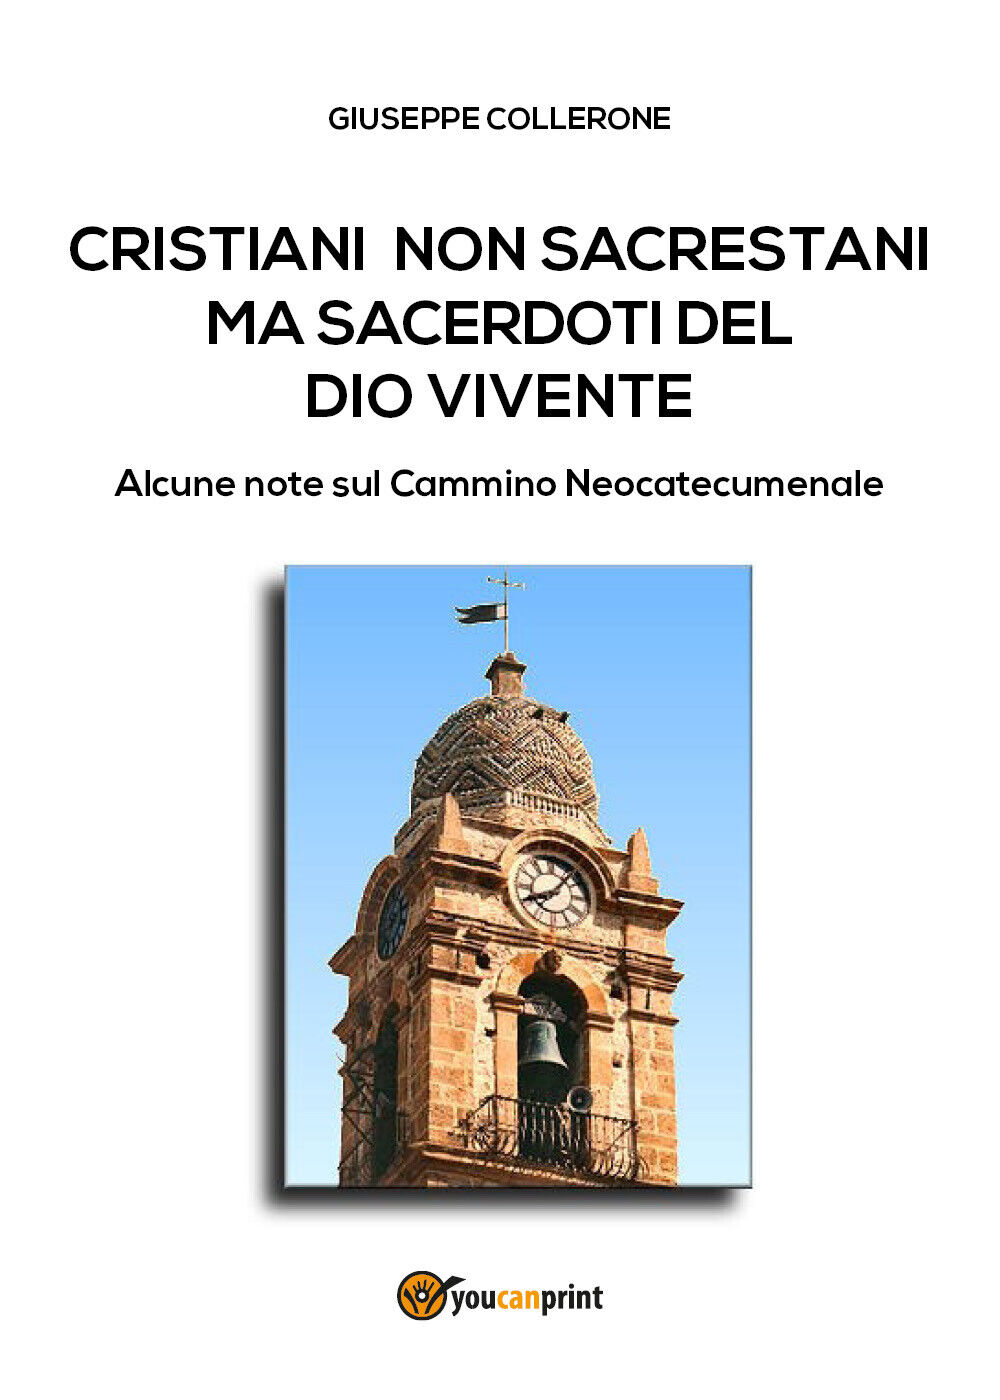 Cristiani non sacrestani  di Giuseppe Collerone,  2018,  Youcanprint libro usato